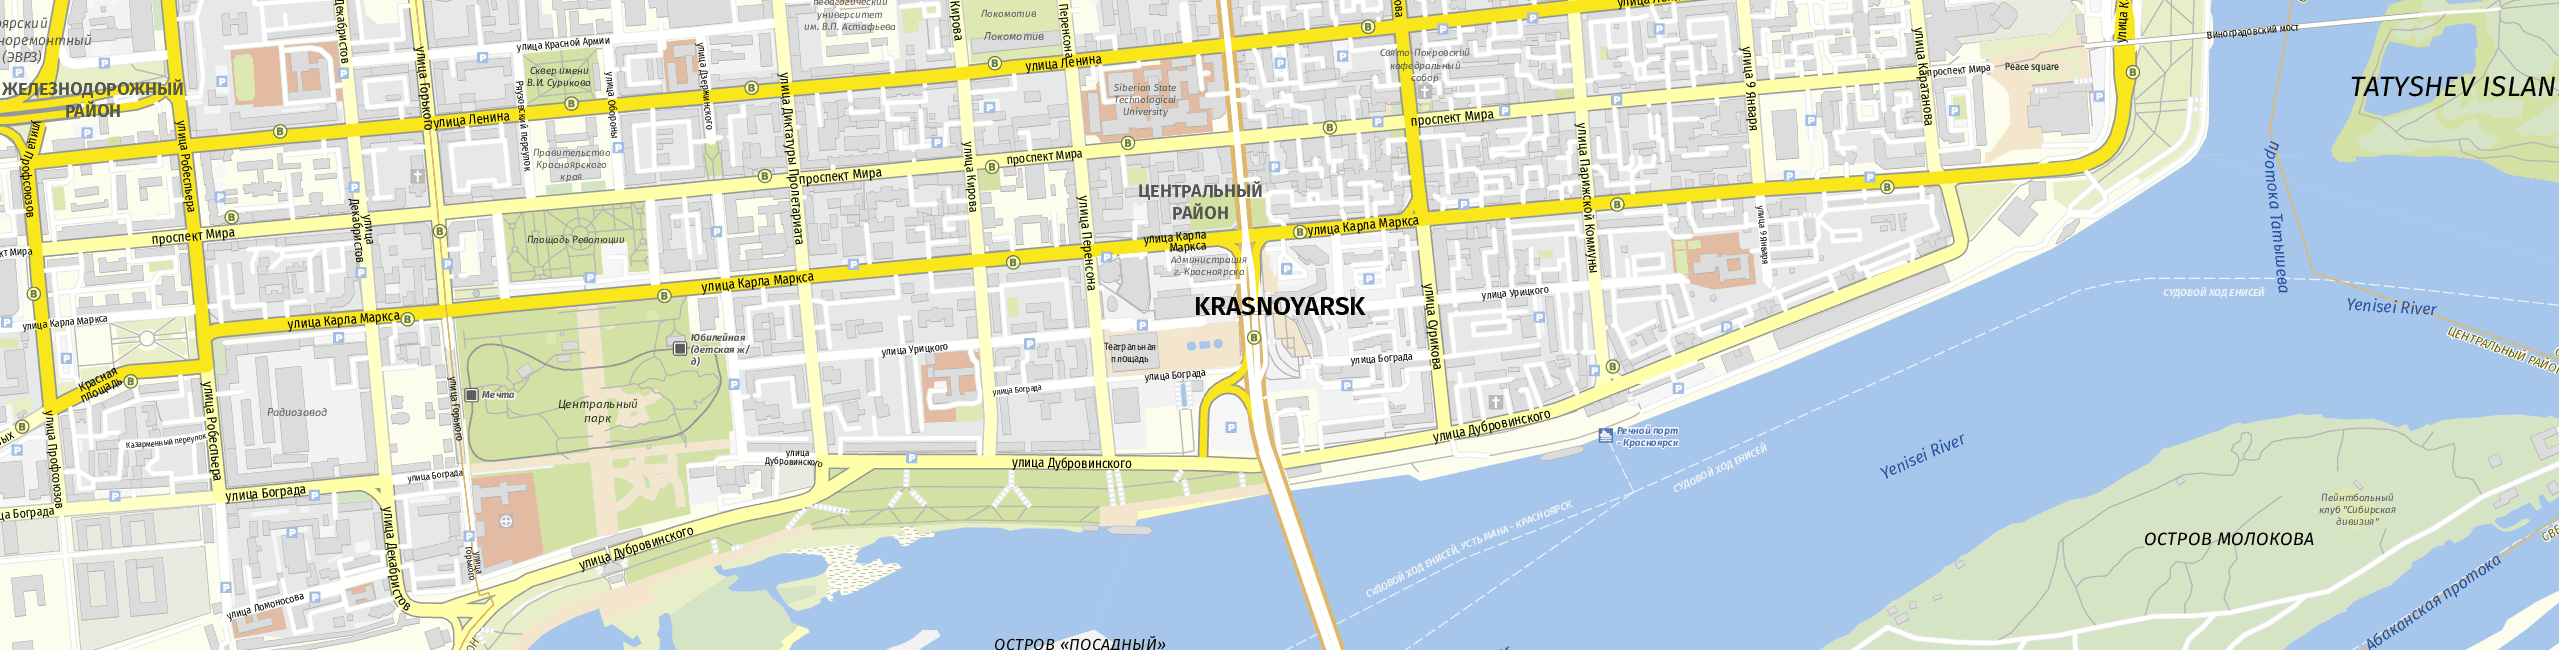 Stadtplan Krasnoyarsk zum Downloaden.